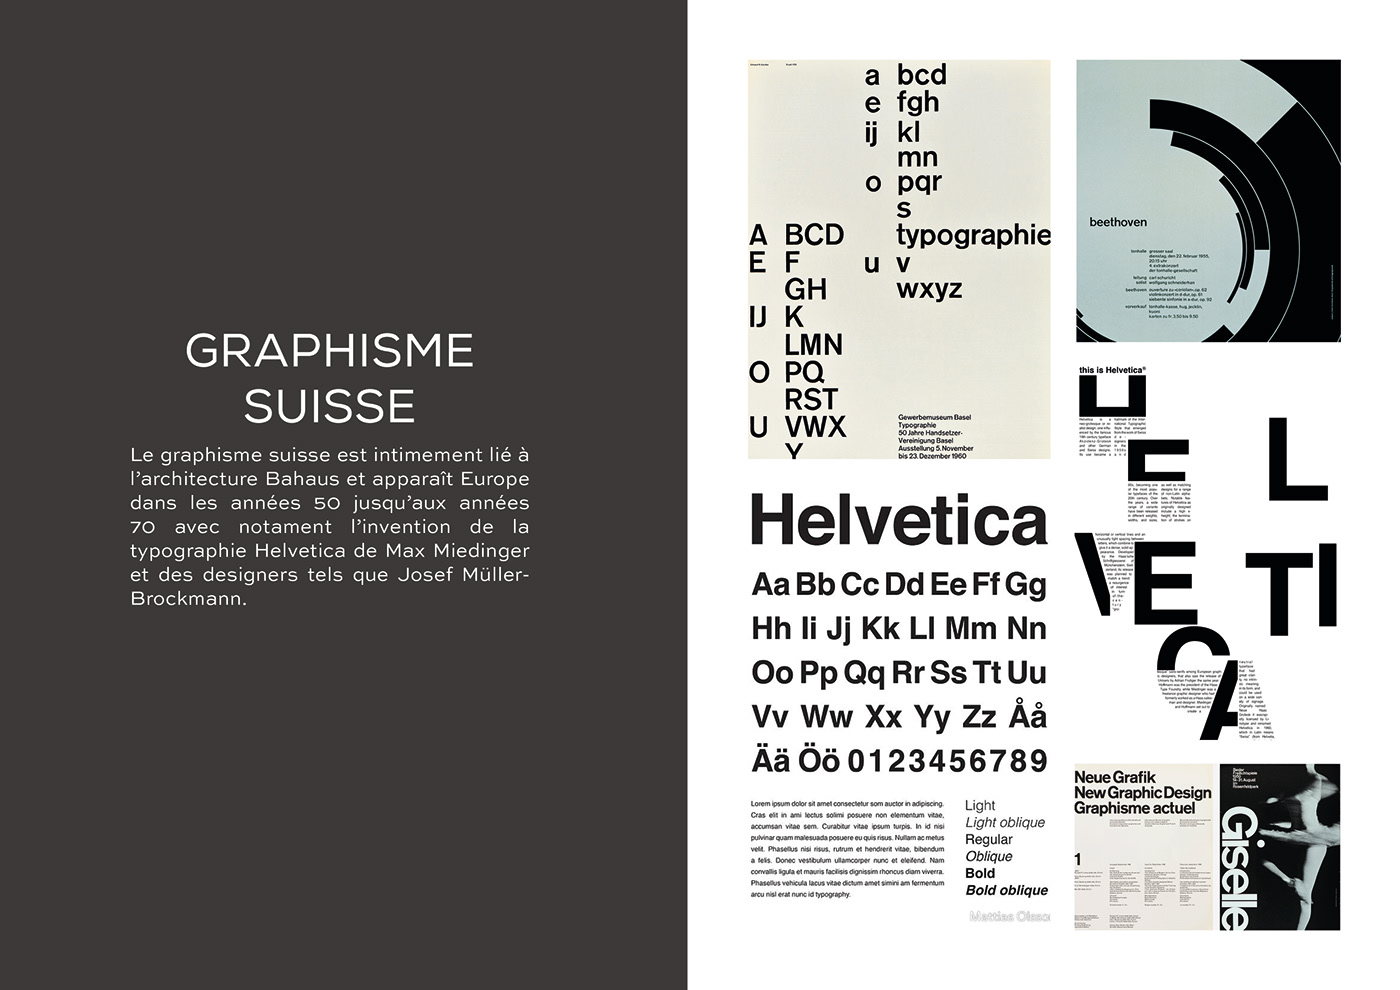 design Graphic Designer photoshop Suisse ad magazine verallia innovation bottle